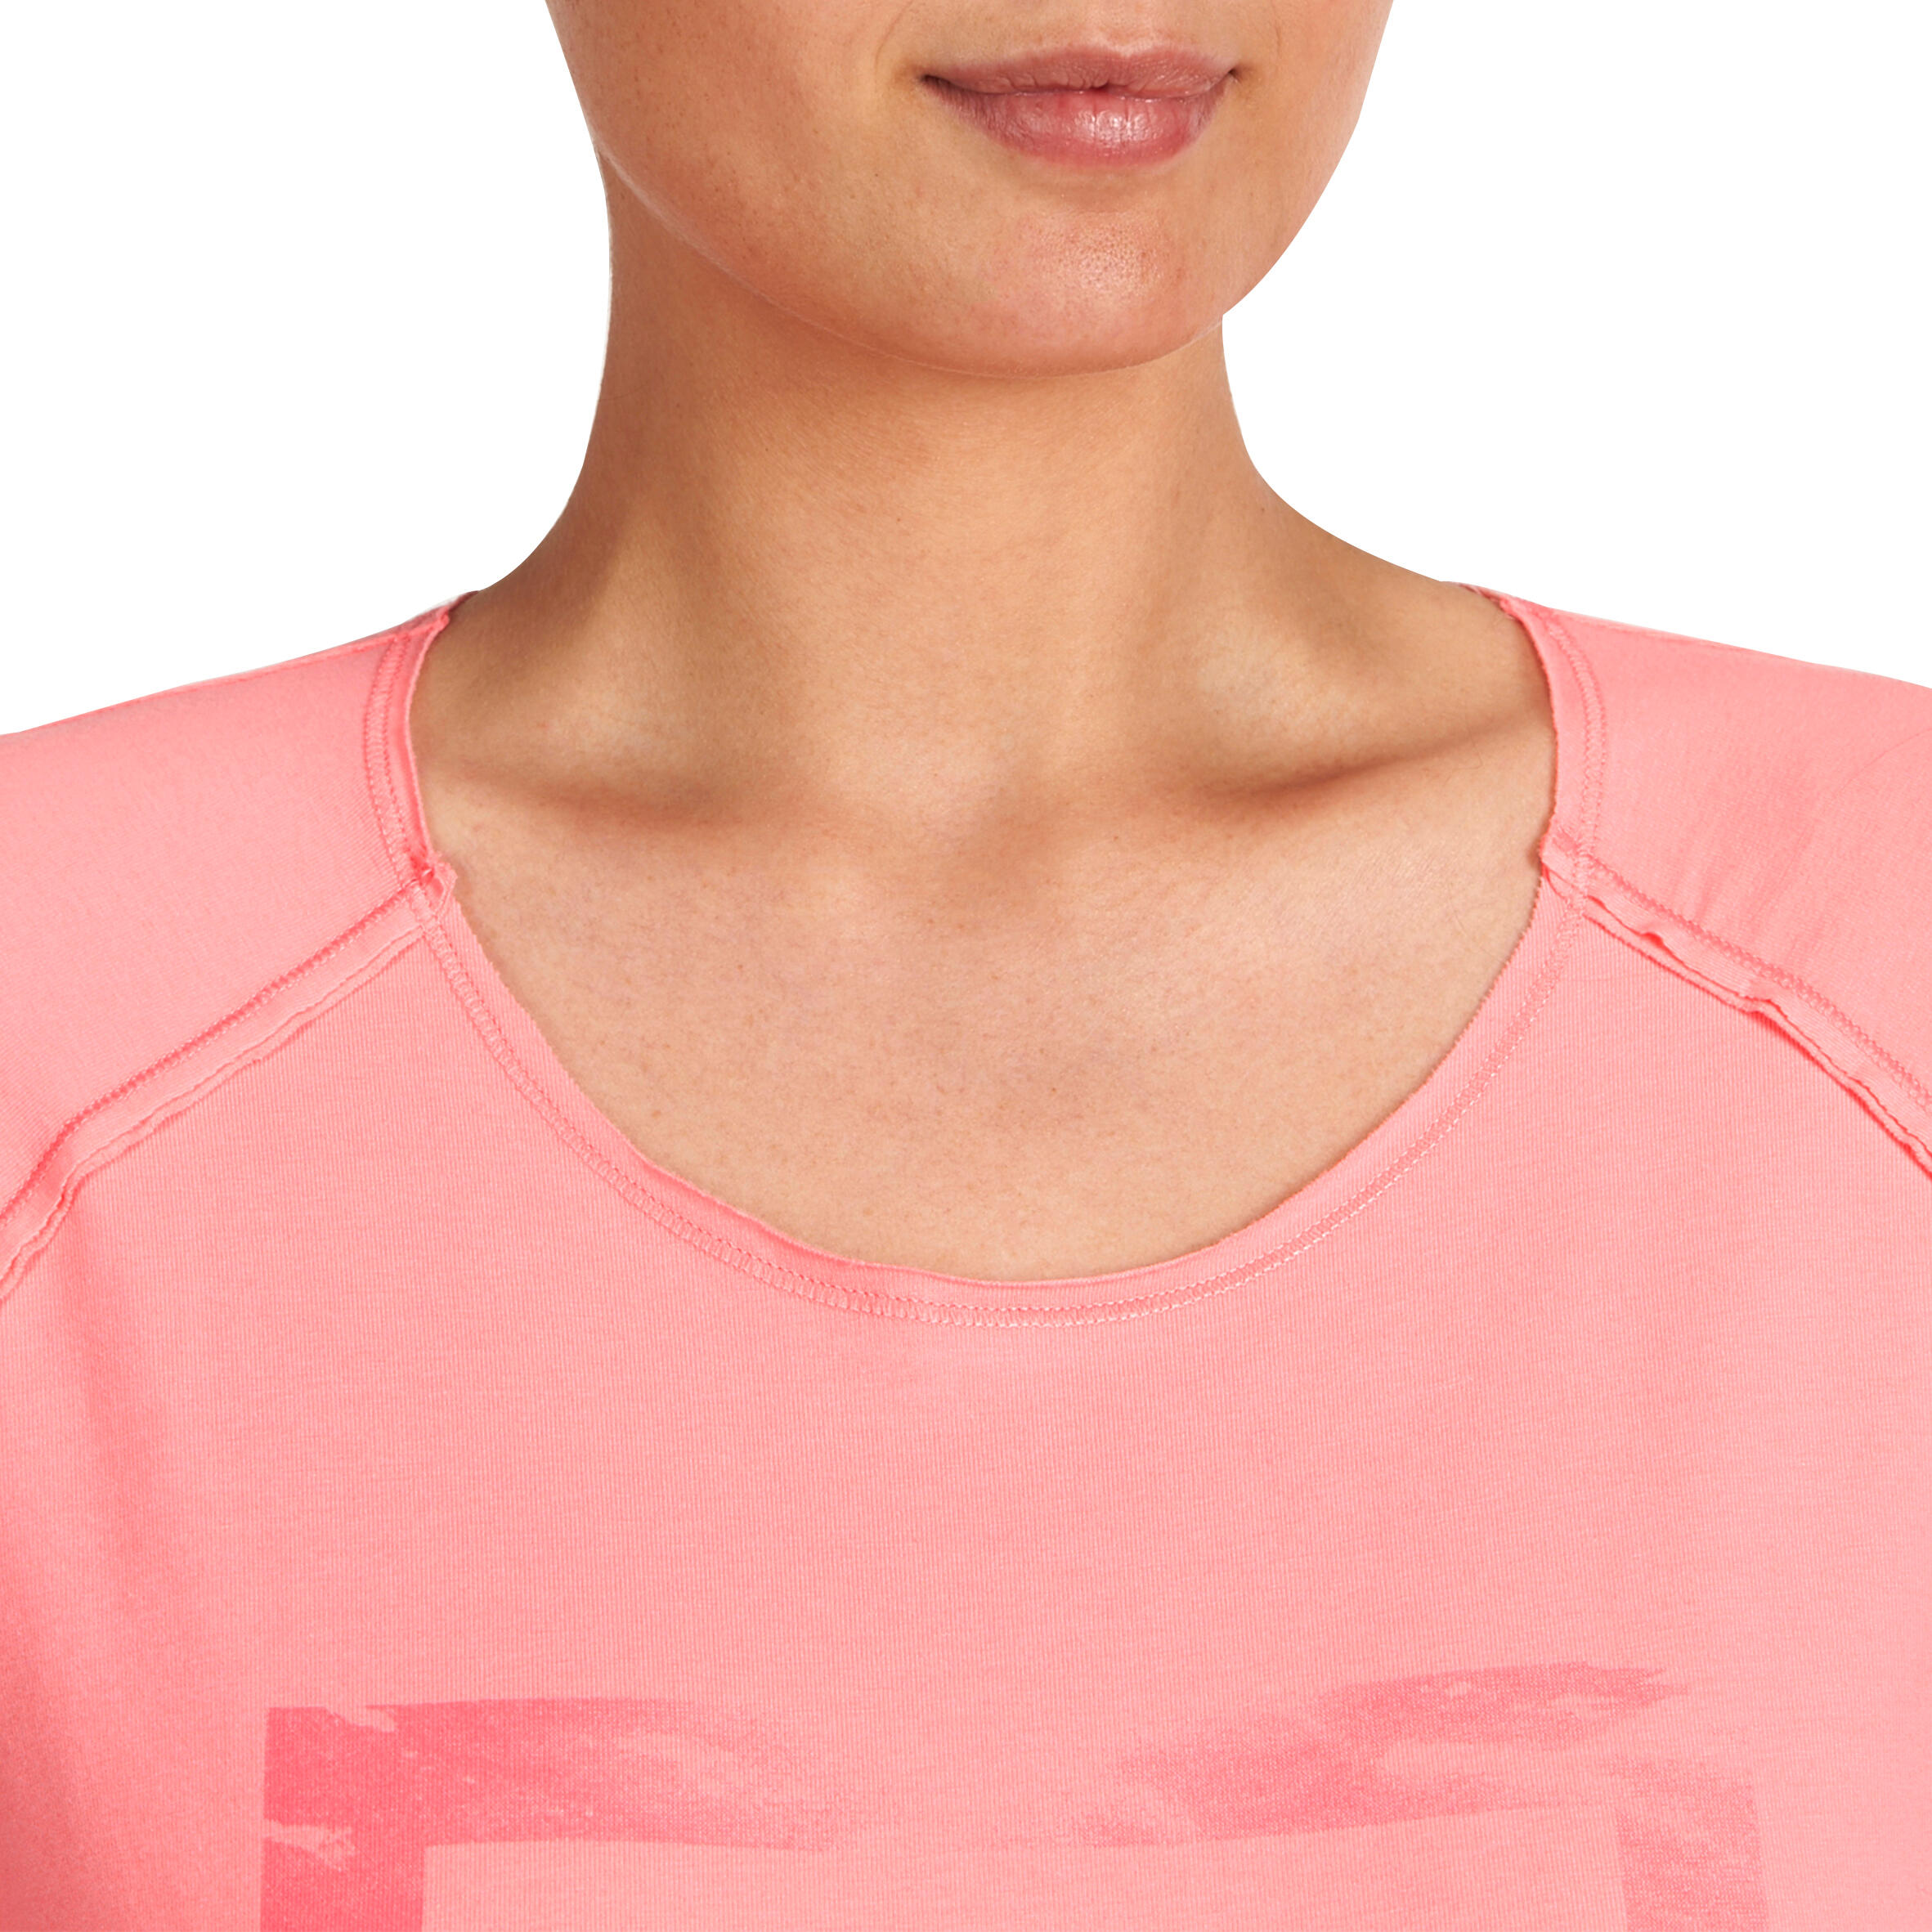 Women's Organic Cotton Long-Sleeved Yoga T-Shirt - Coral 6/13